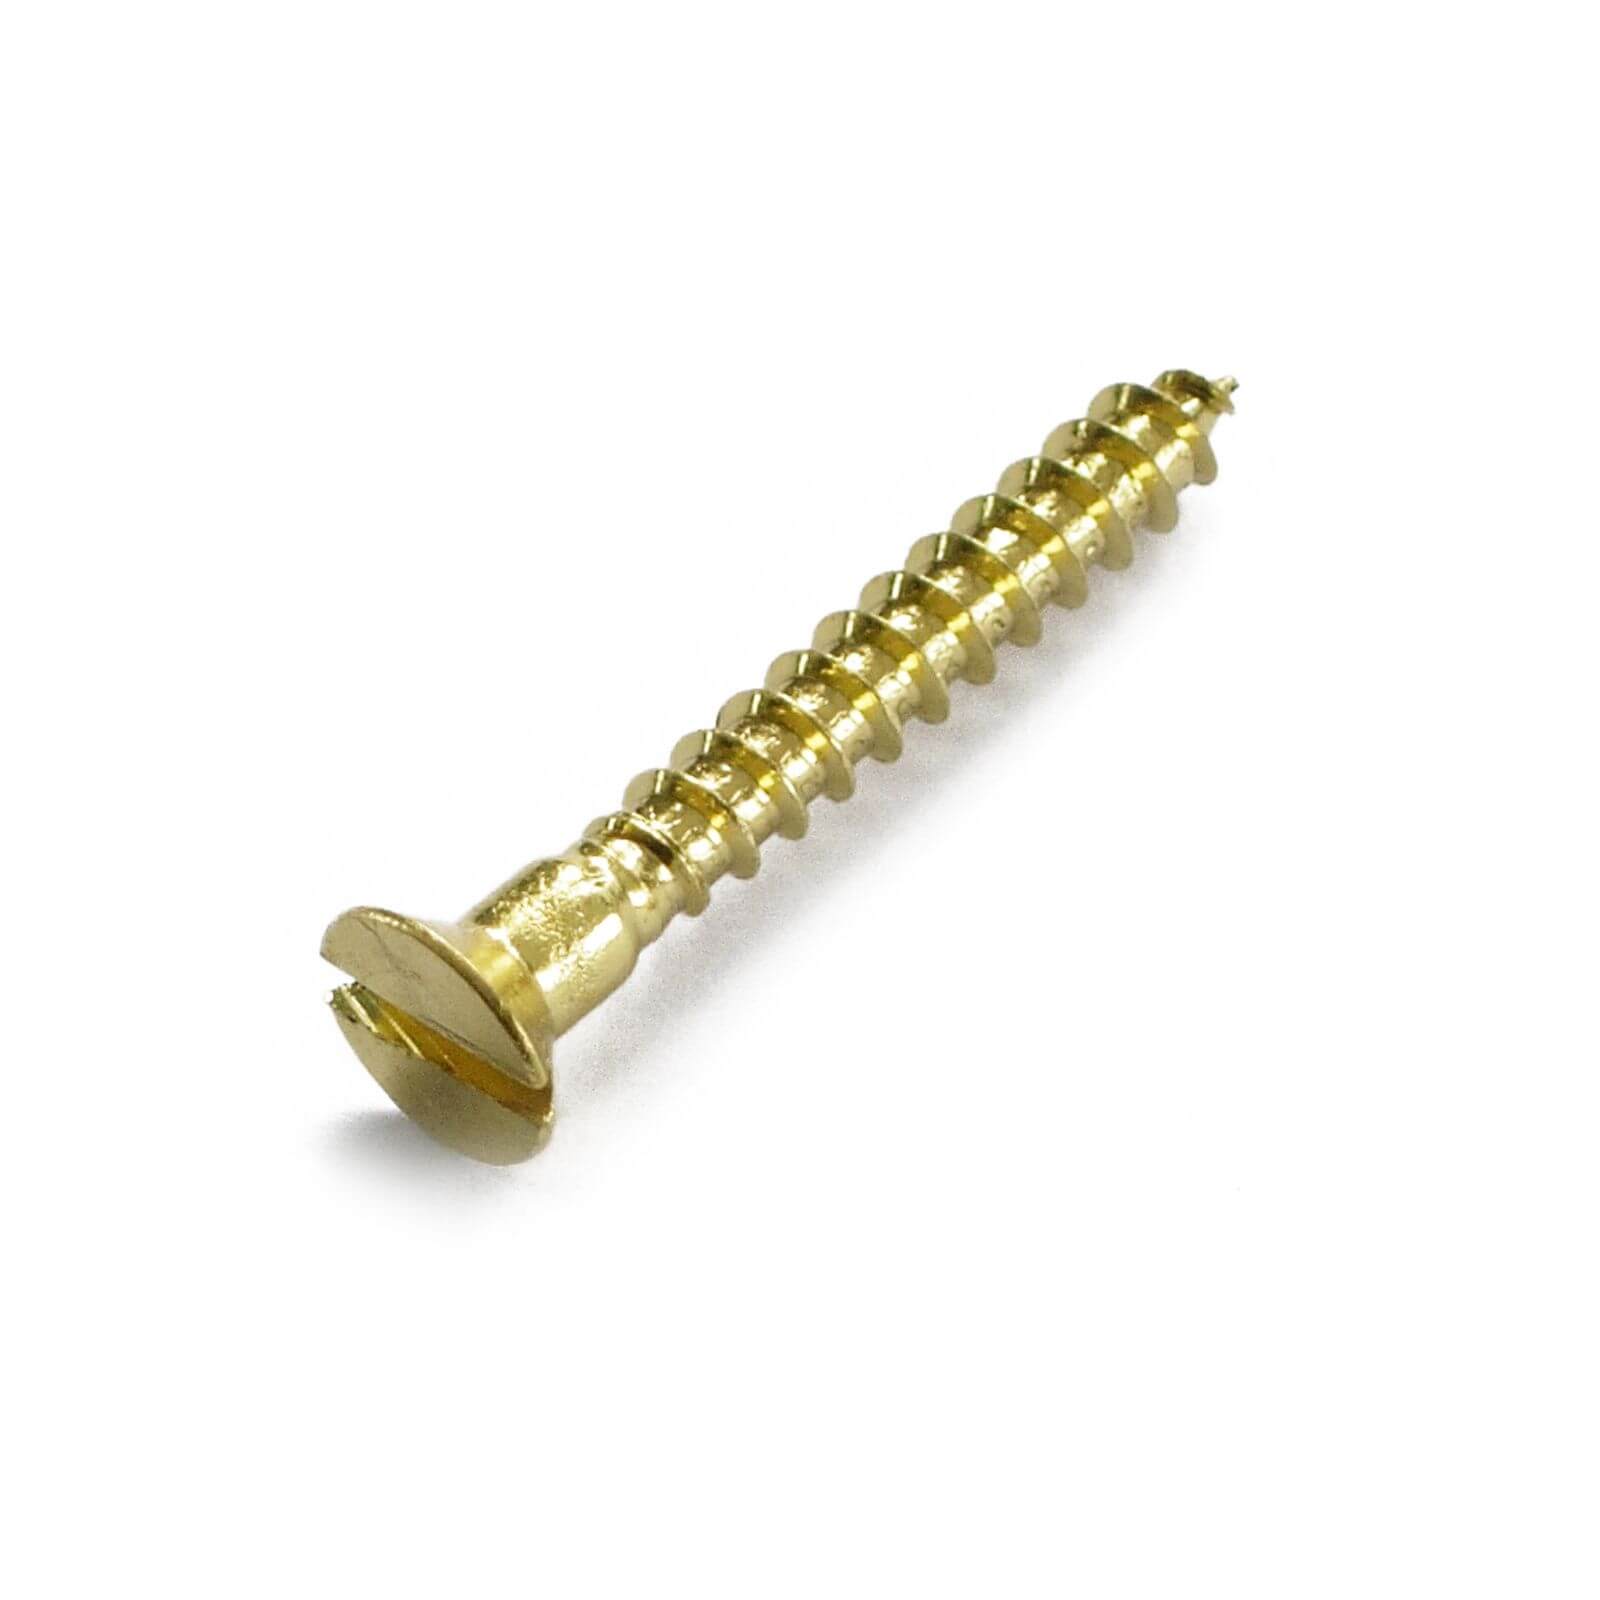 Wood Screw - Countersunk - Brass - 4 x 40mm - 10 Pack